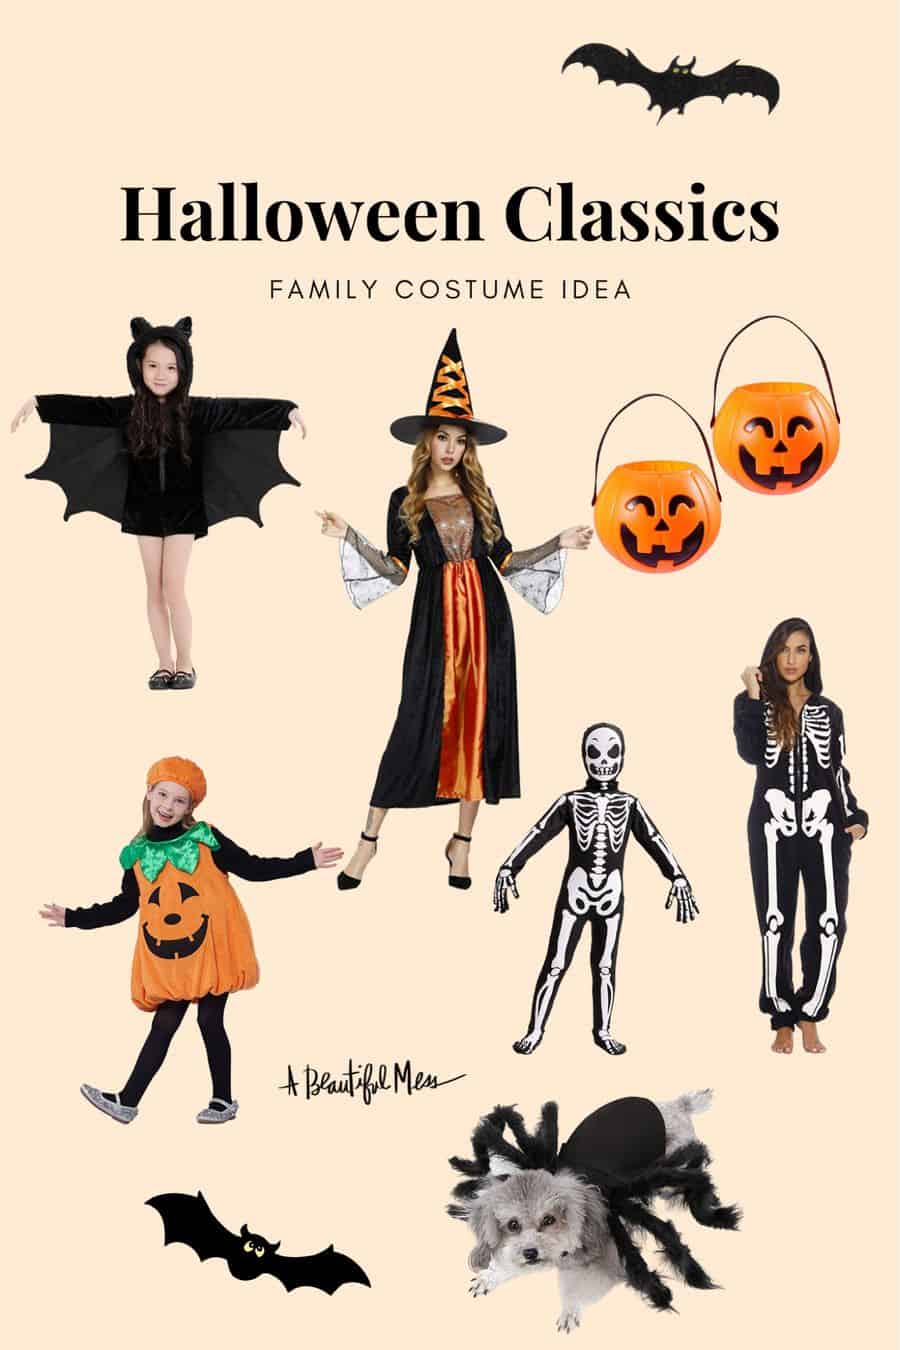 Family halloween costume ideas